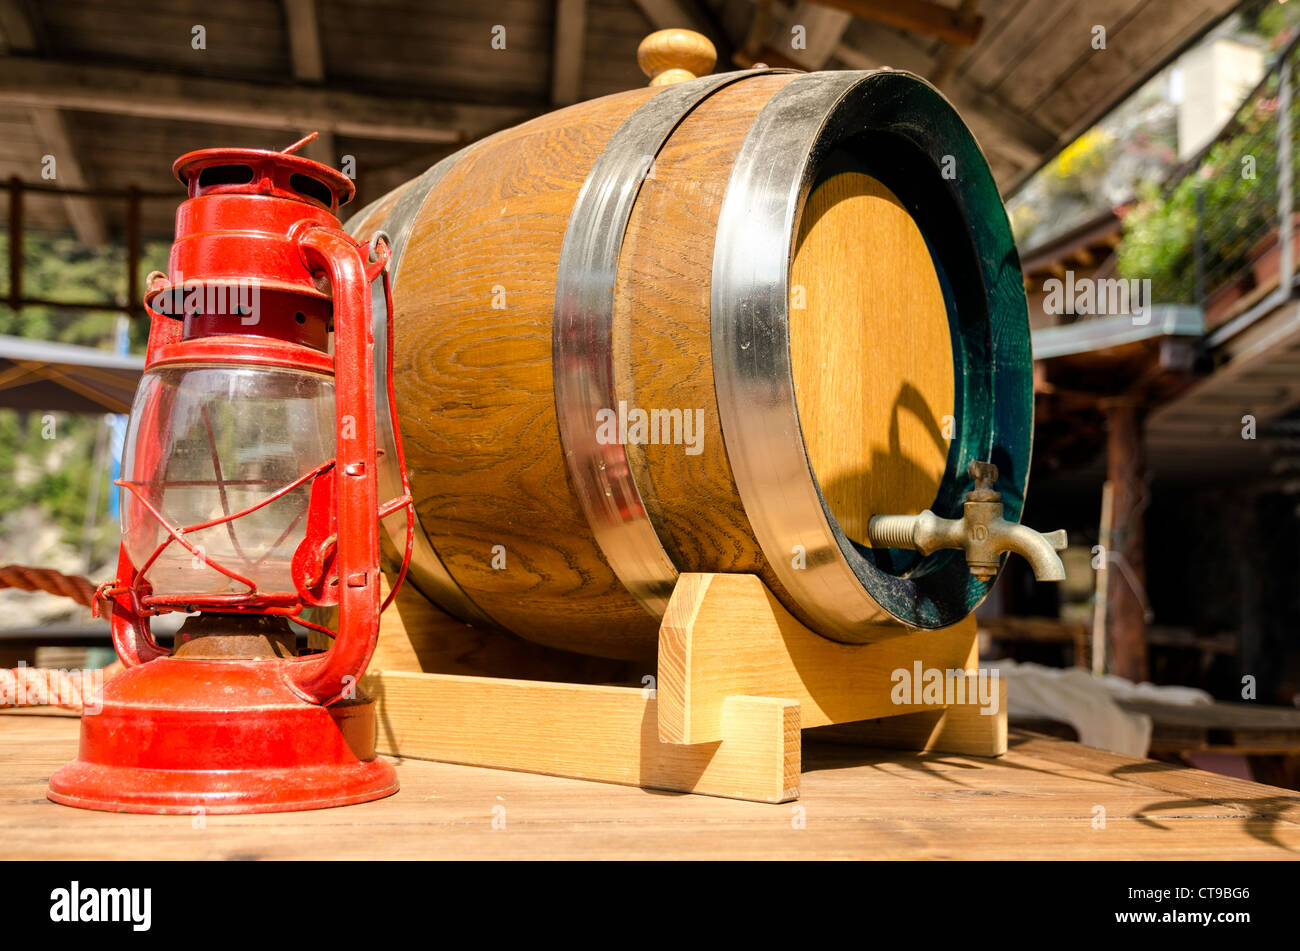 Barril de vino como decoración fotografías e imágenes de alta resolución -  Alamy